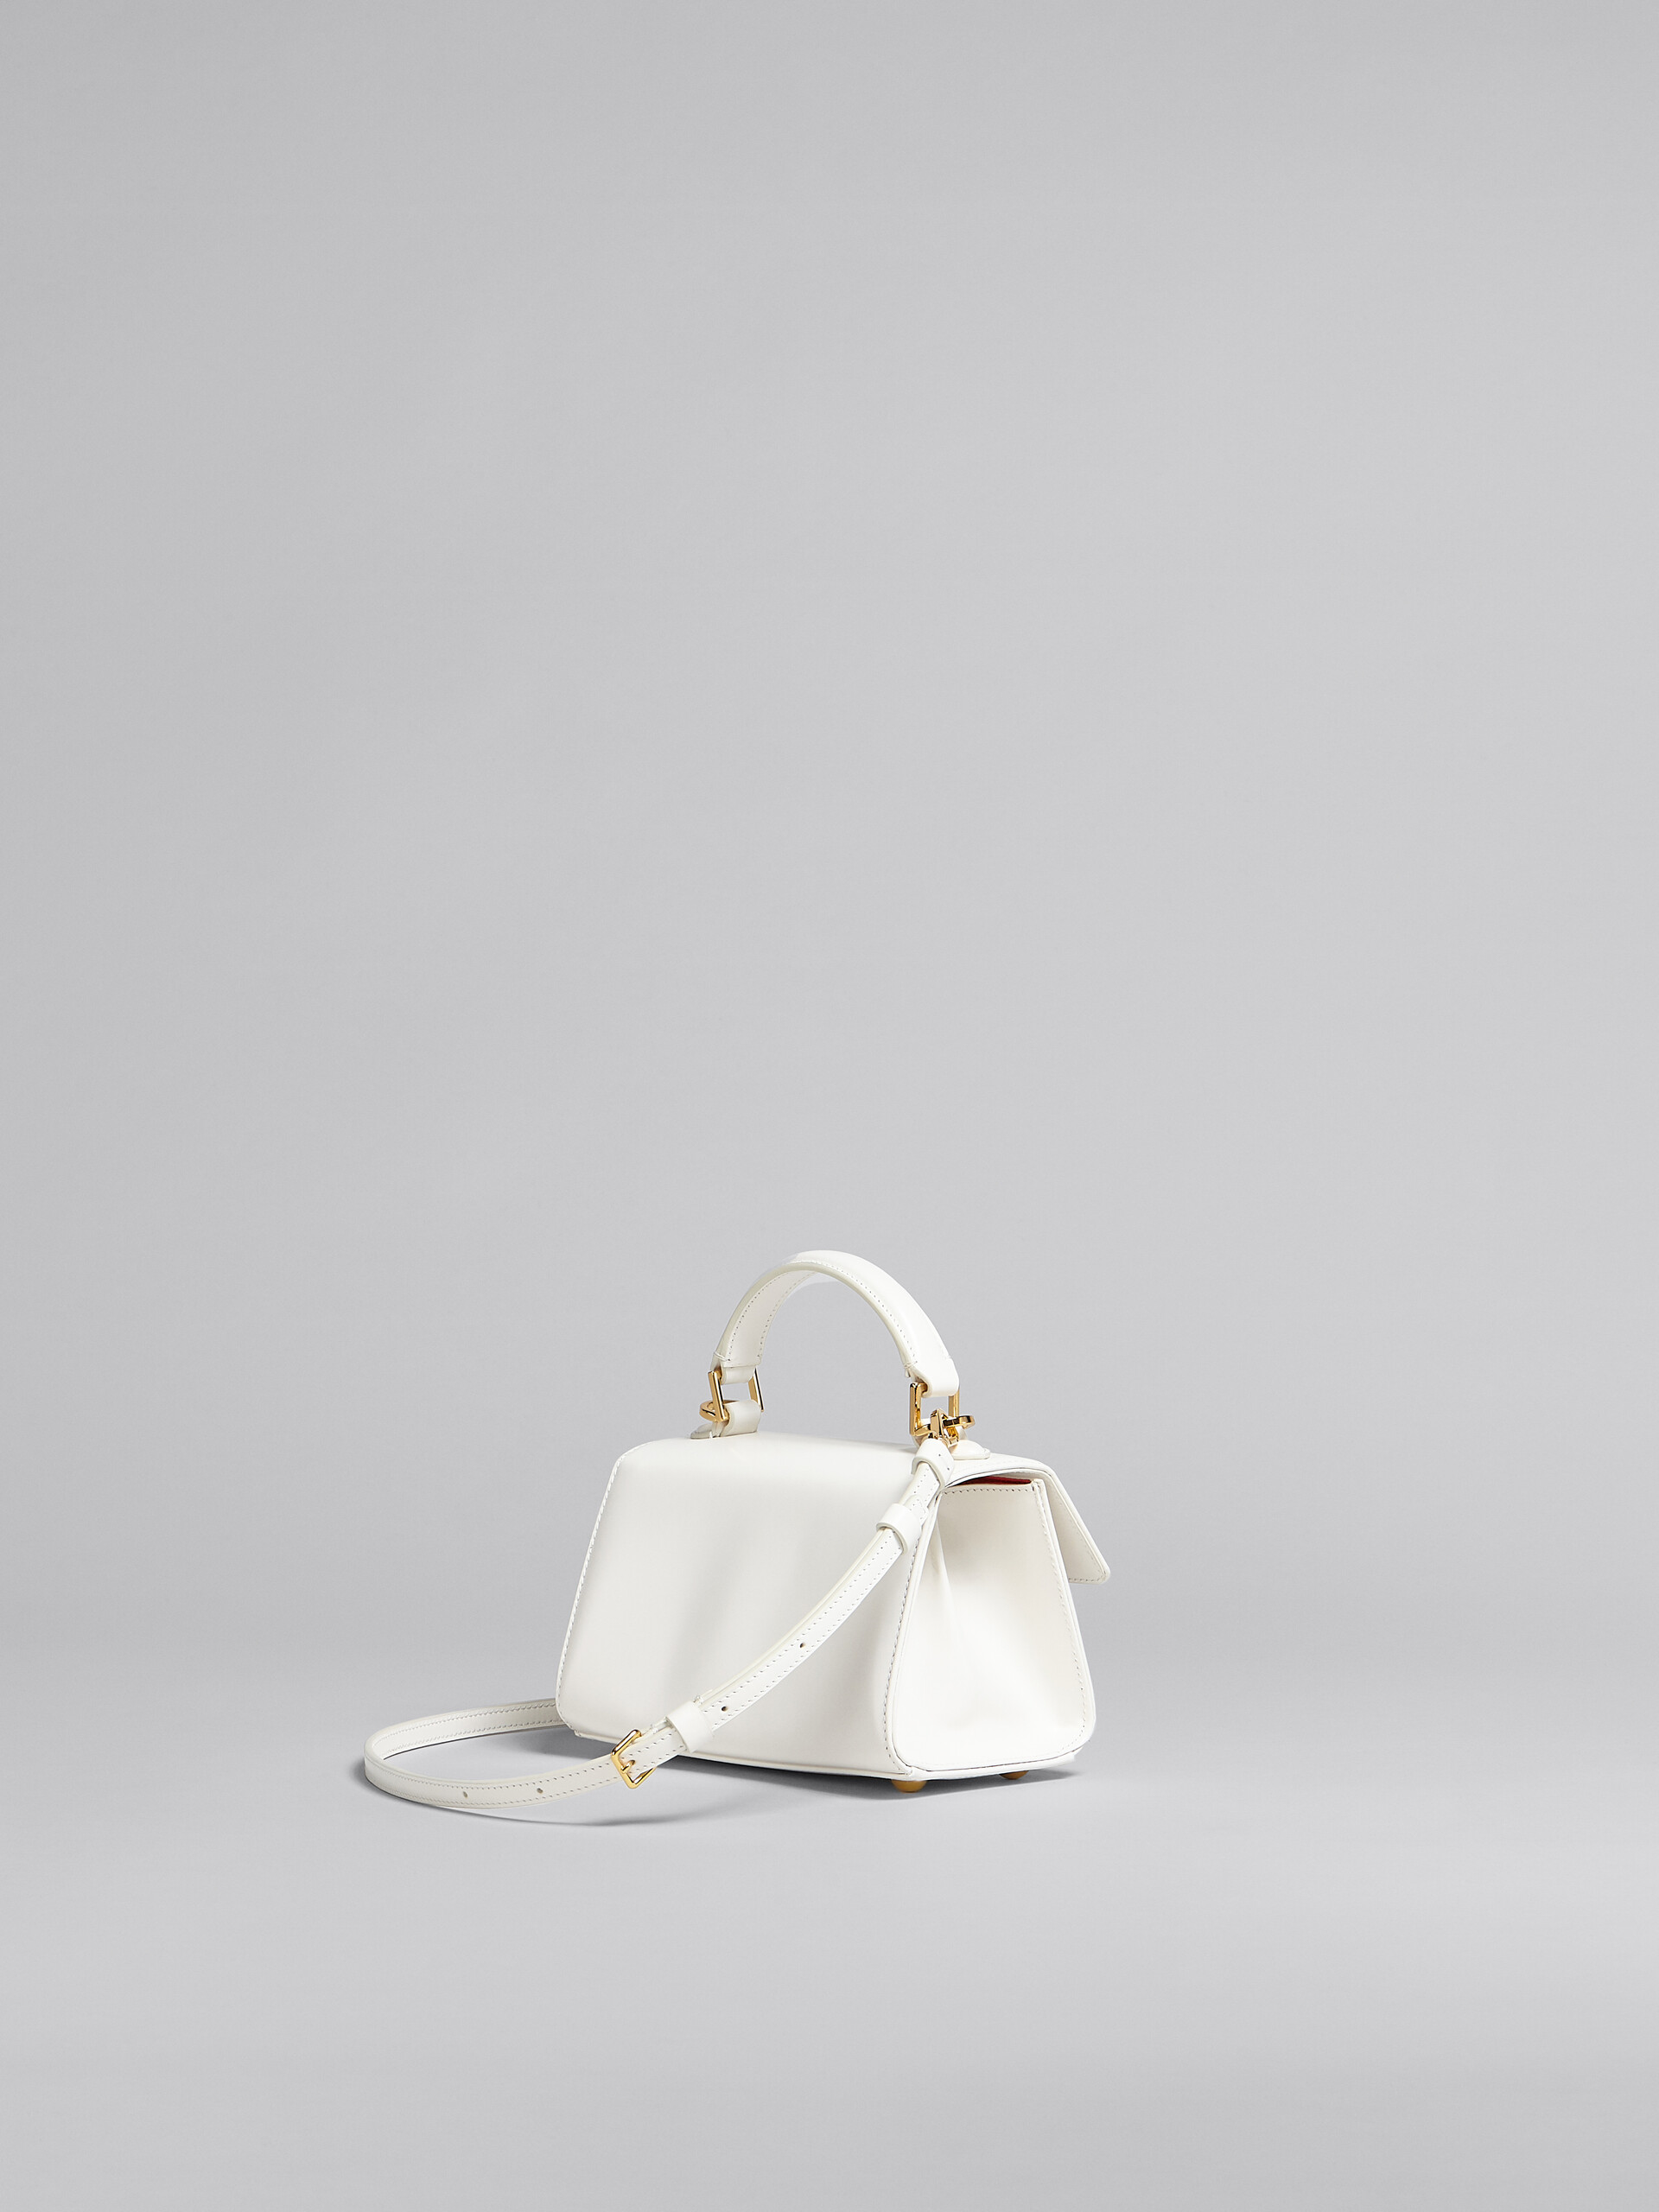 Relativity Mini Bag in white leather - Handbags - Image 3